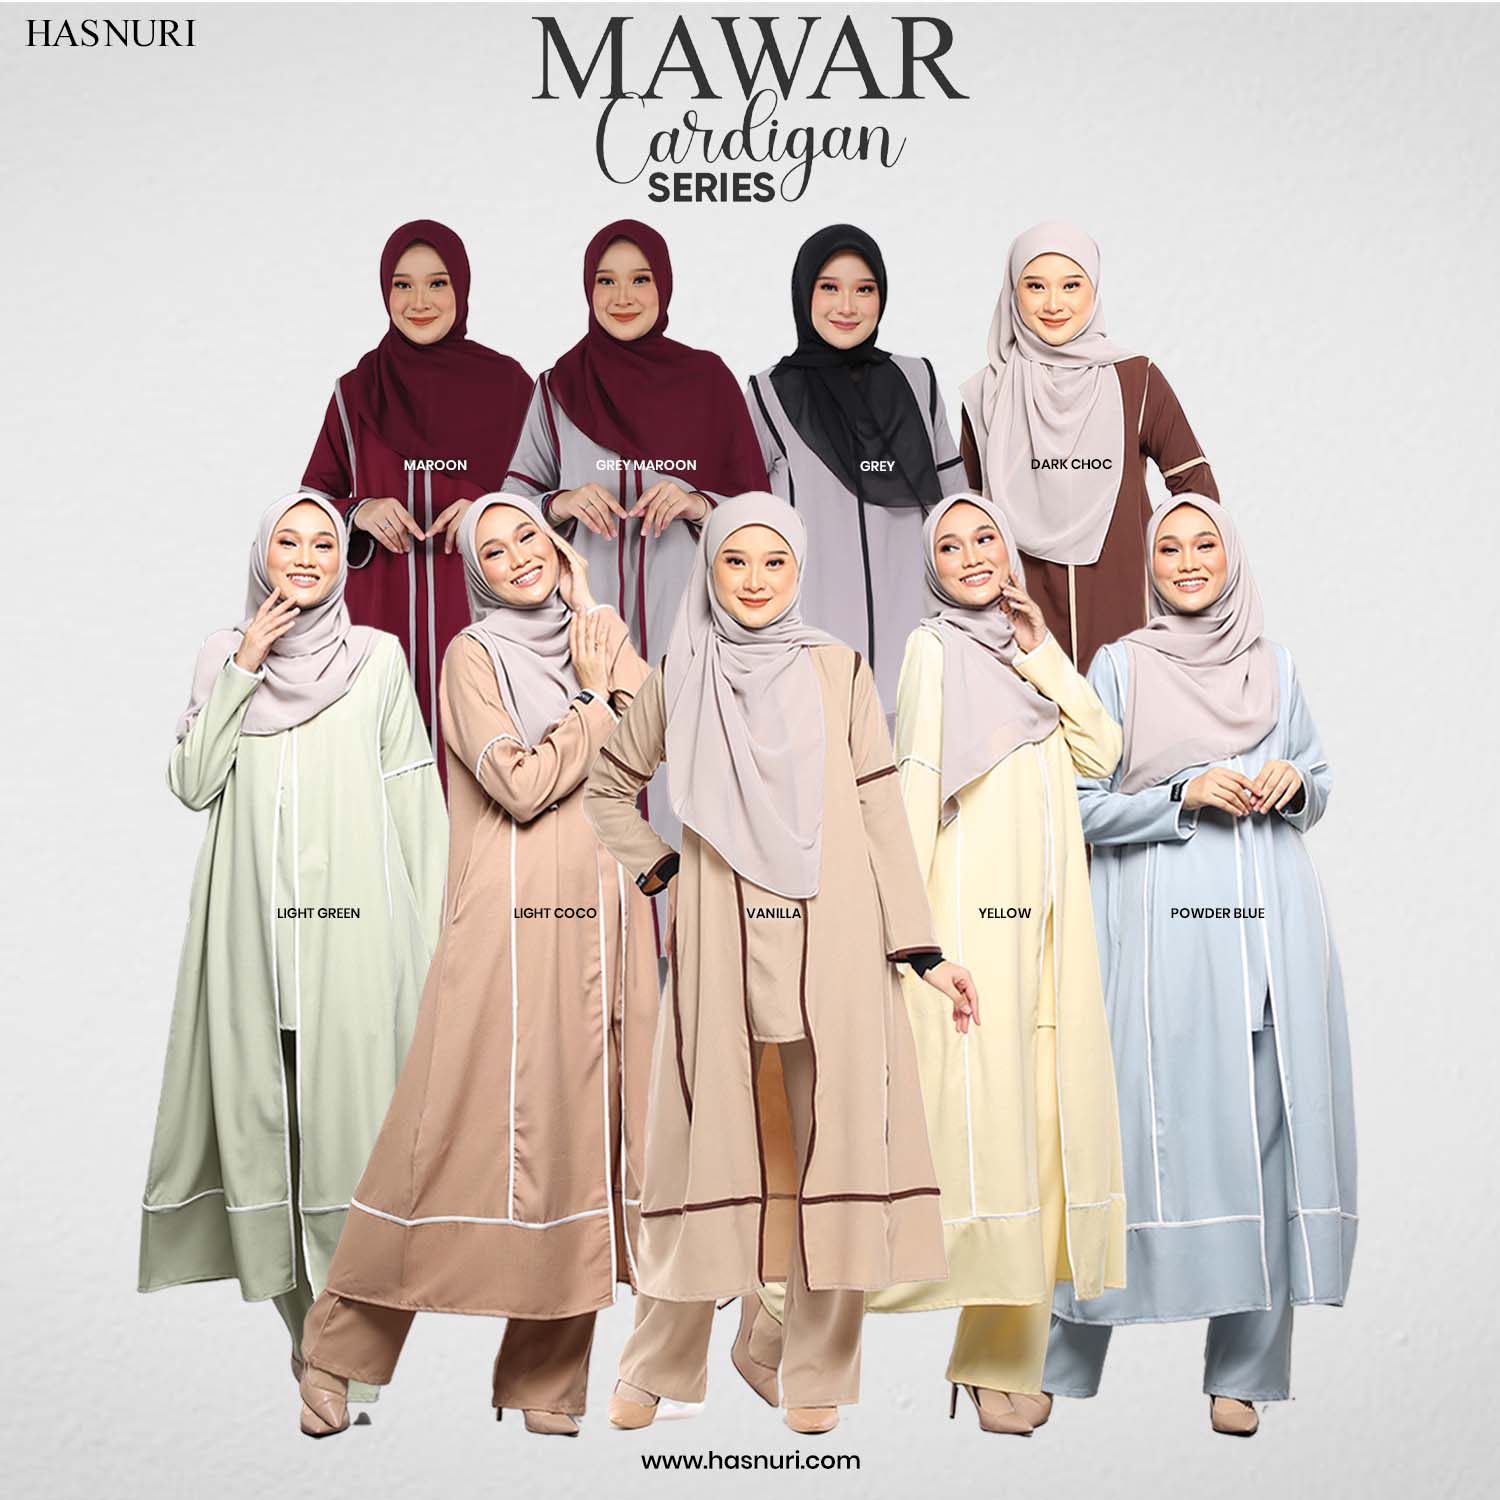 Mawar Cardigan Series - Grey Maroon